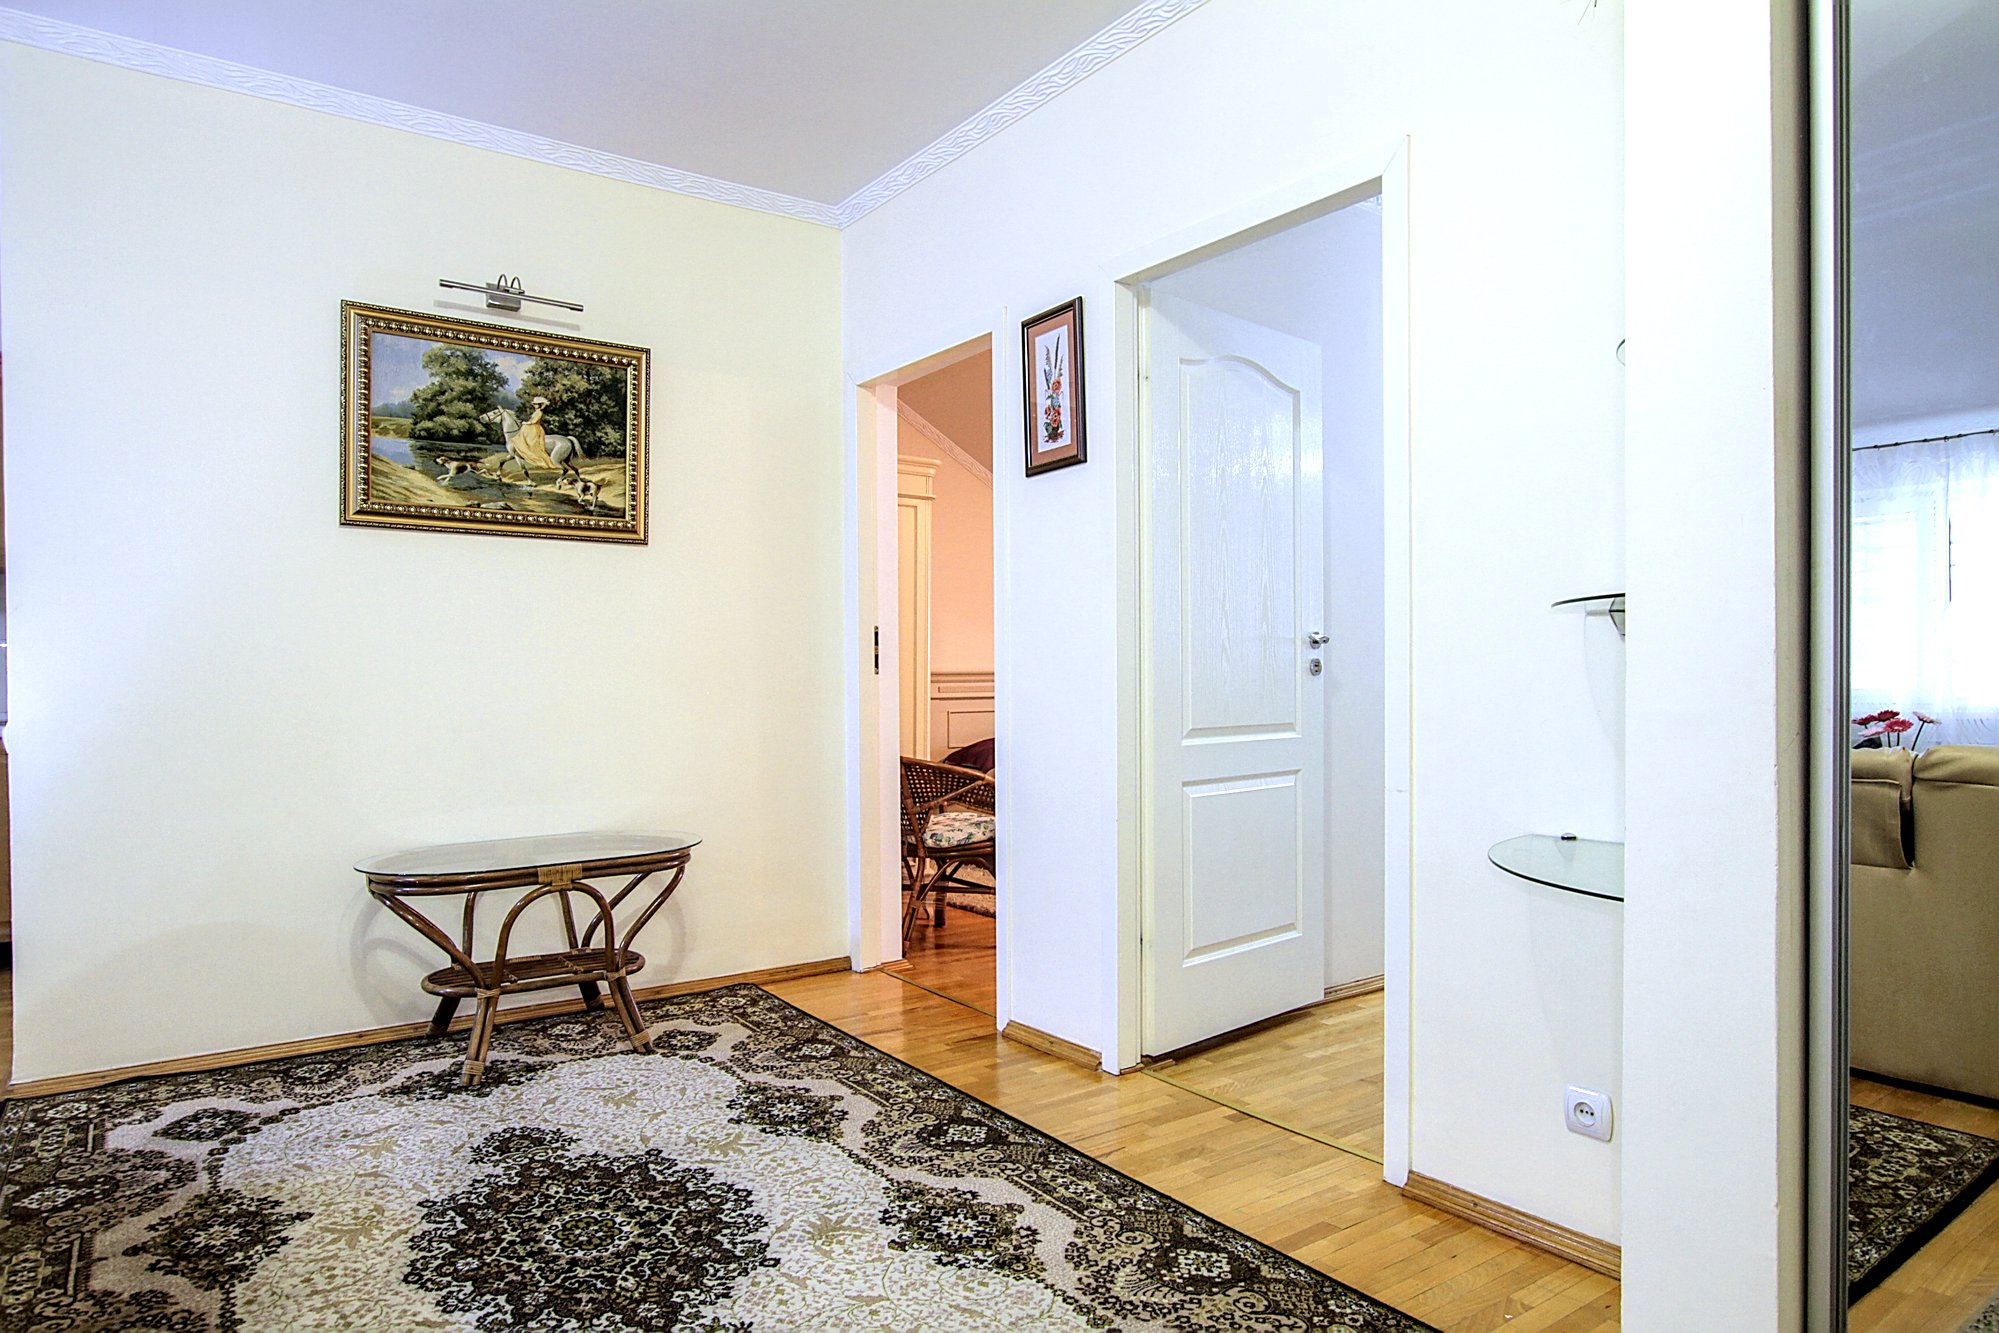 Large Central Apartment это квартира в аренду в Кишиневе имеющая 3 комнаты в аренду в Кишиневе - Chisinau, Moldova